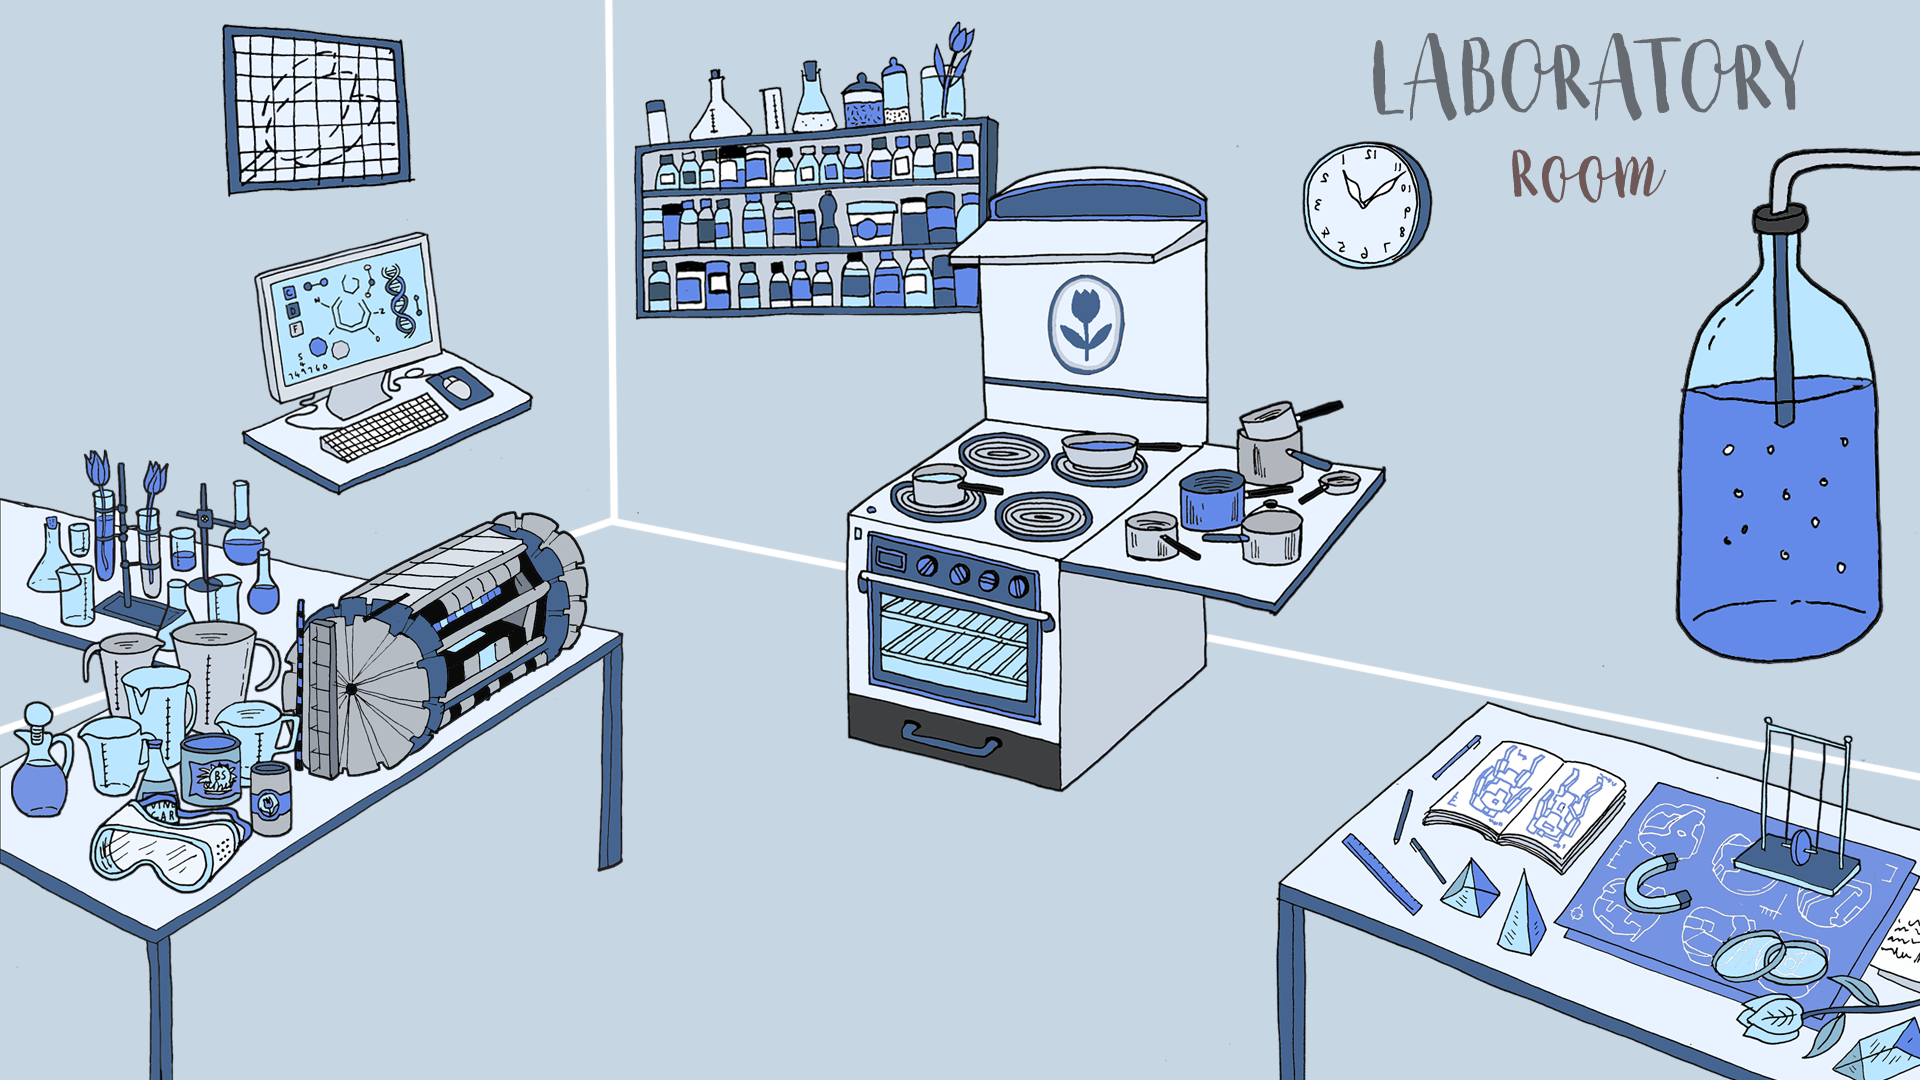 Laboratory Room